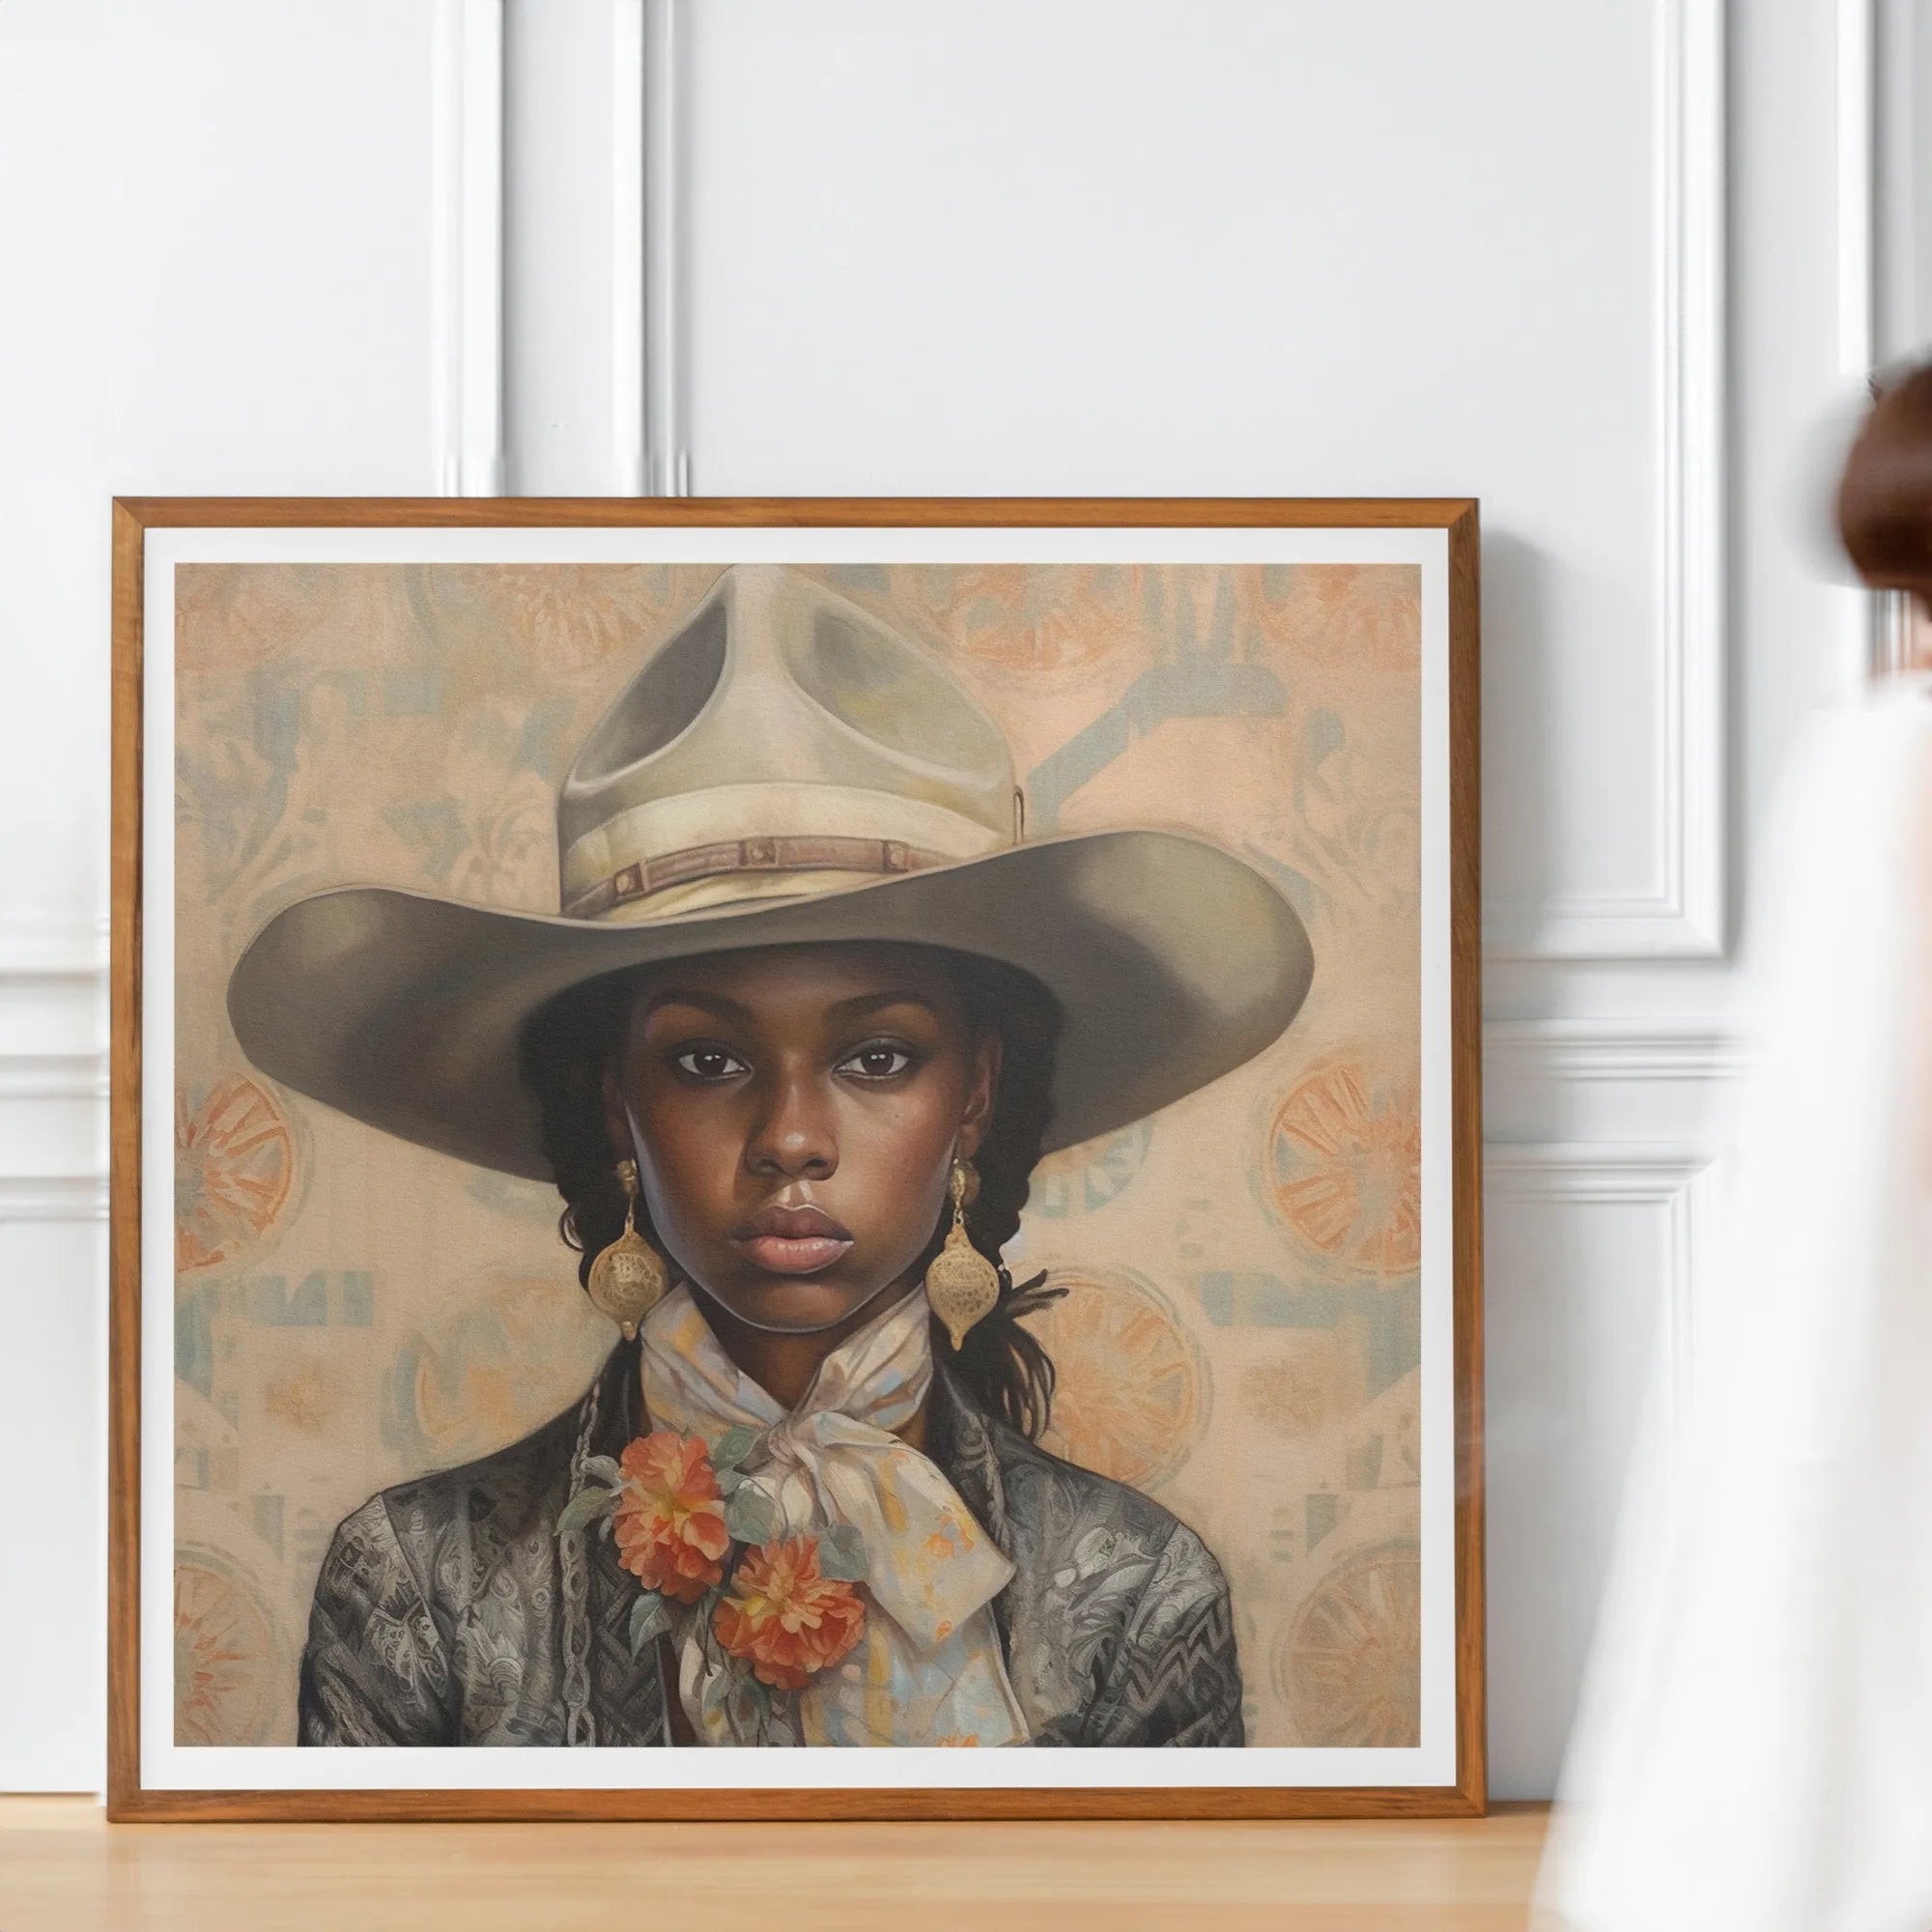 Letitia - Lesbian Black Cowgirl Art Print - Wlw Sapphic Femme - 40’x40’ - Posters Prints & Visual Artwork